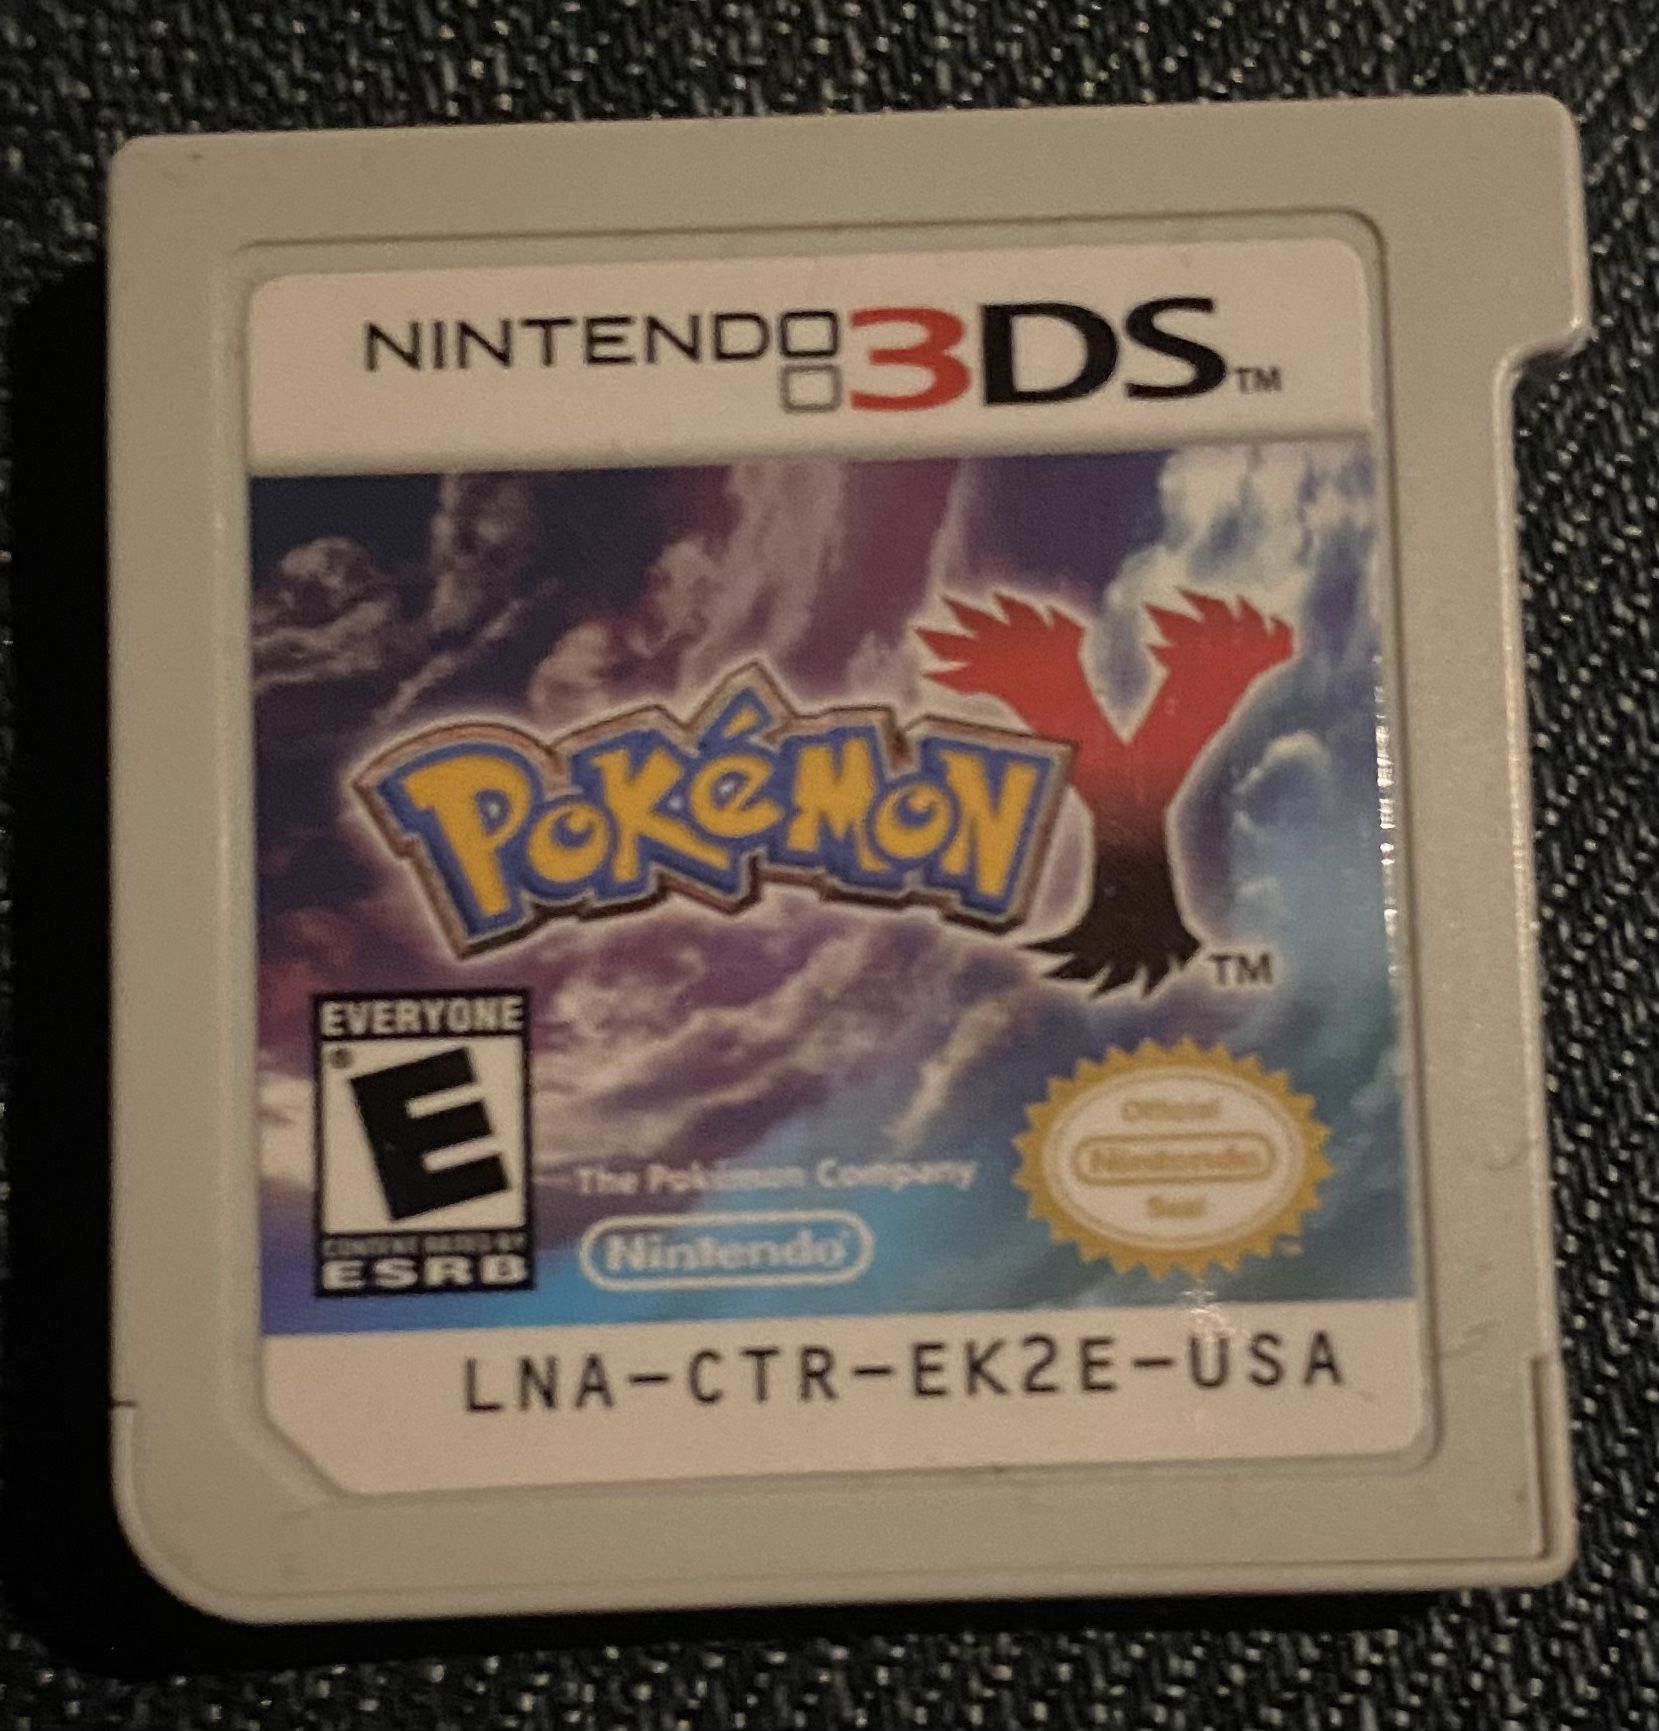 Nintendo 3DS Game: Pokémon Y